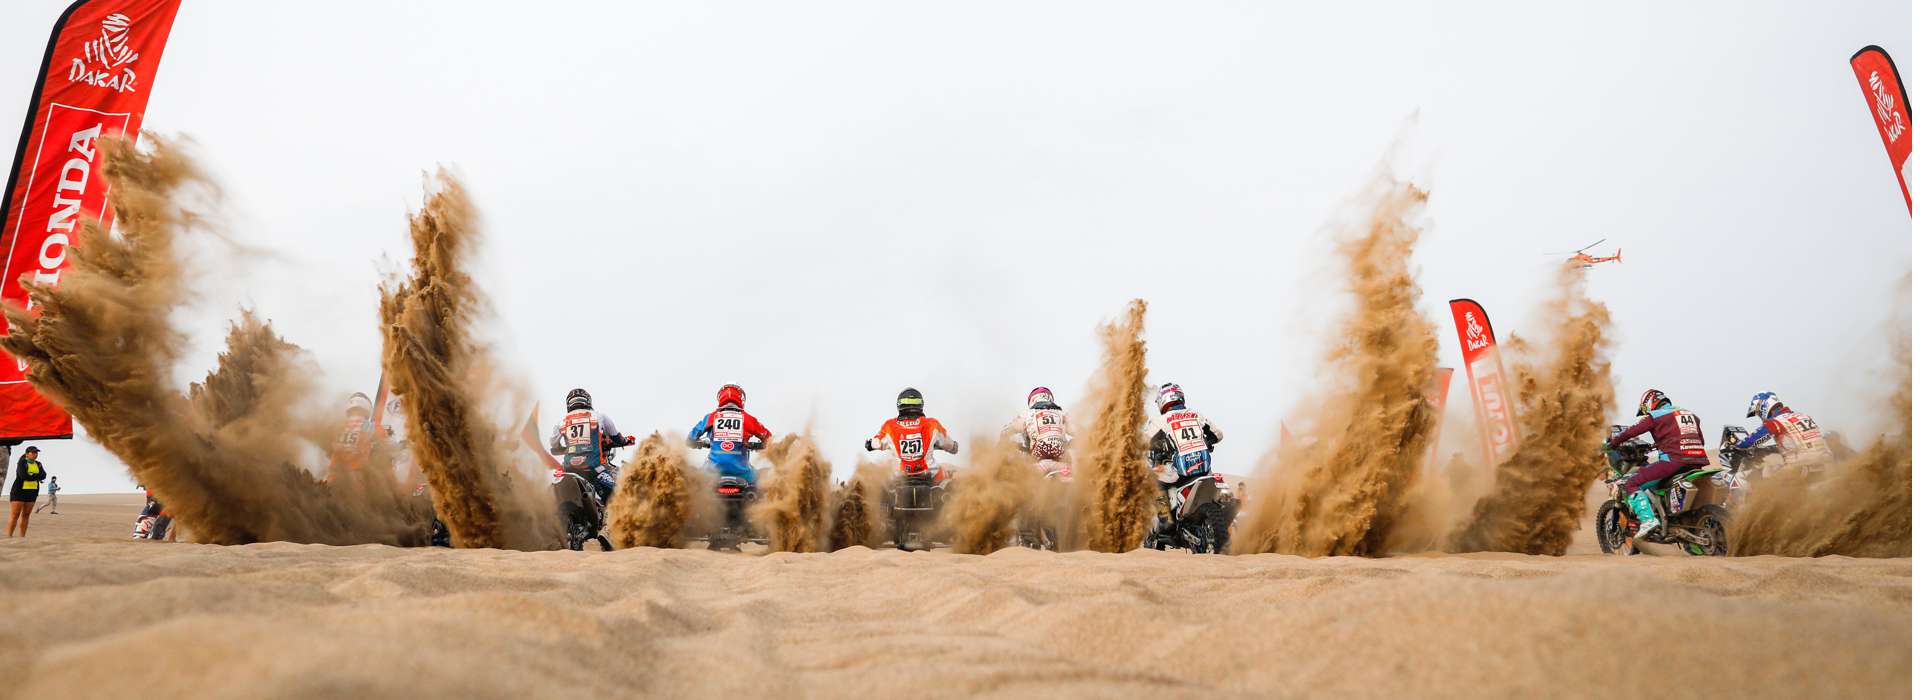 Dakar 2020: Bikes - The KTM Saga, more to come or the end?